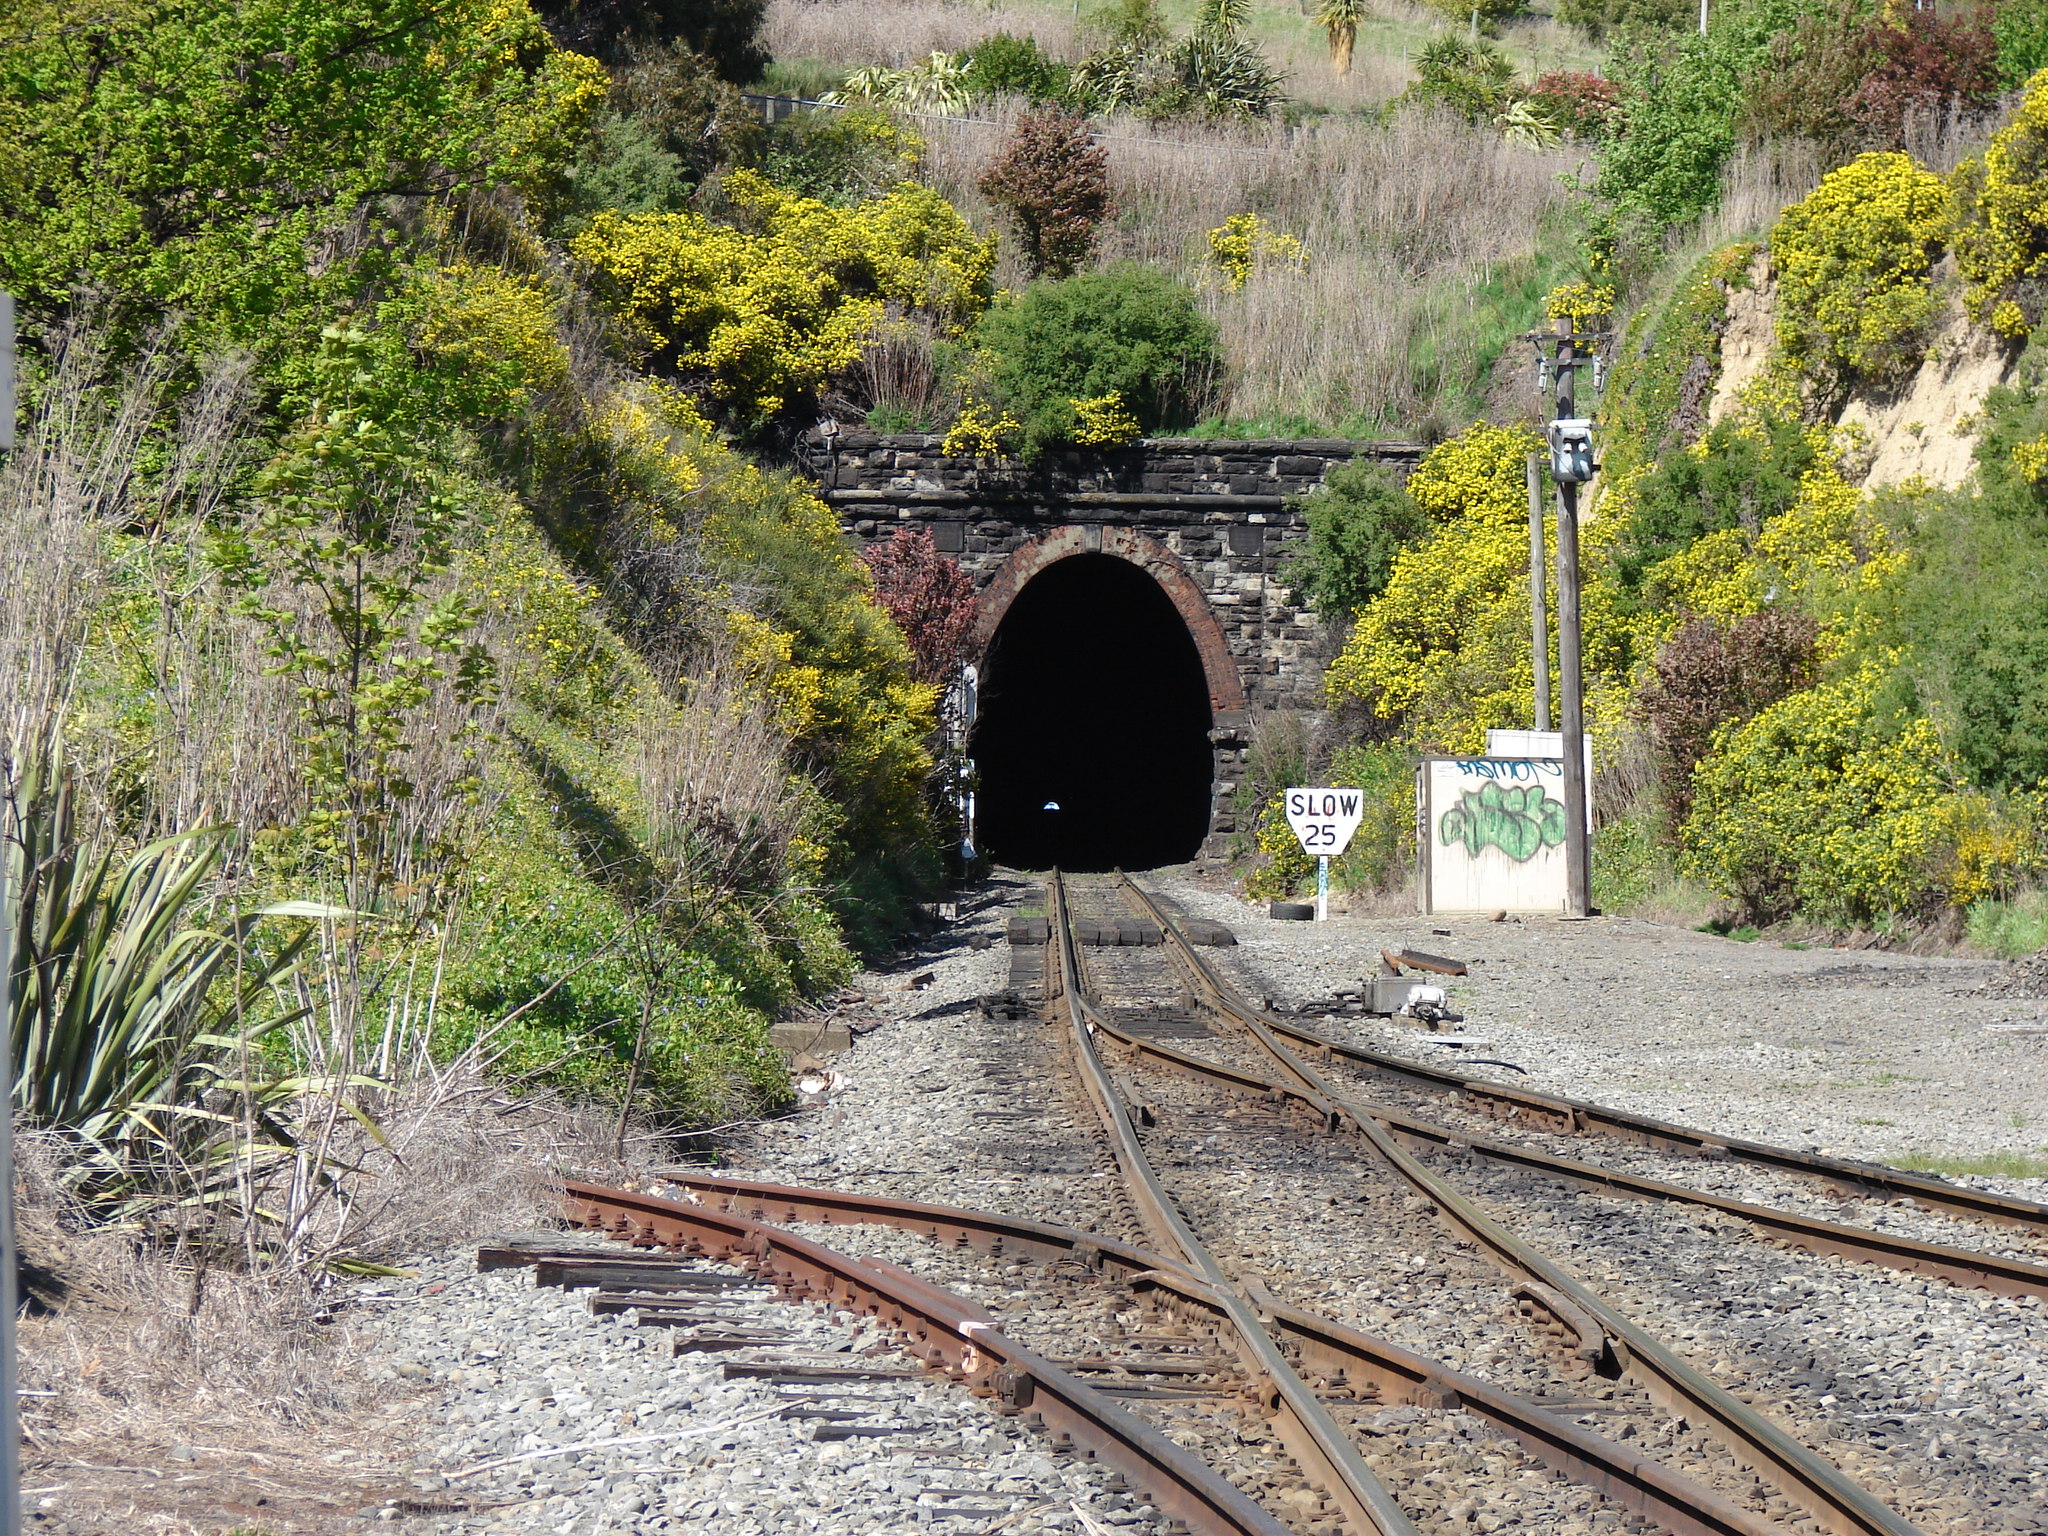 File:Lyttelton rail tunnel 01.jpg - Wikipedia, the free encyclopedia